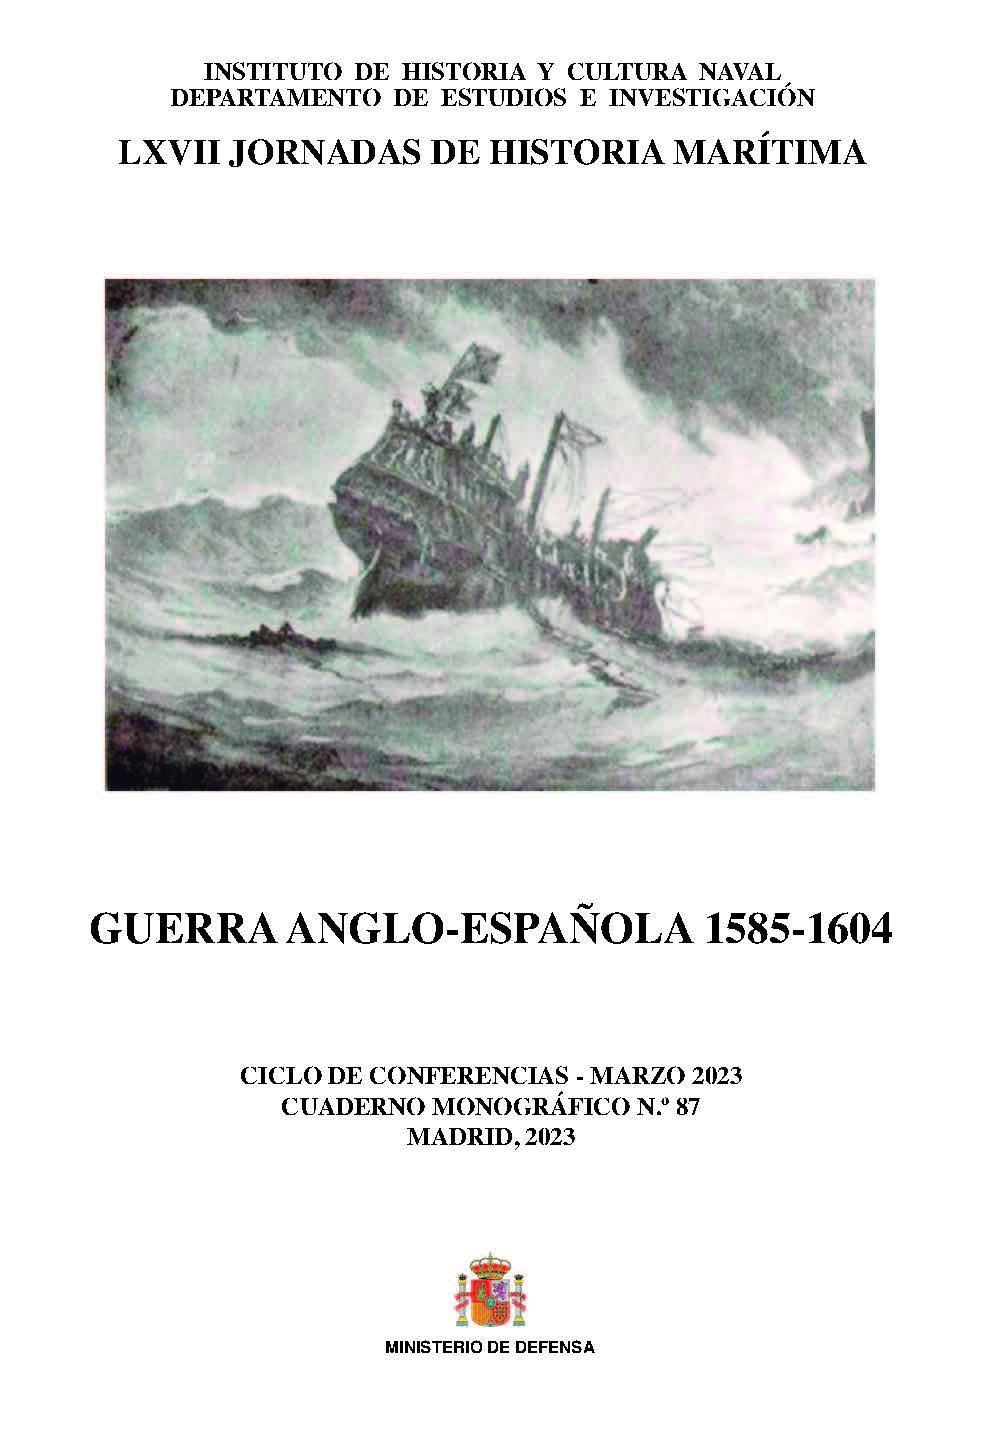 GUERRA ANGLO-ESPAÑOLA
1585-1604